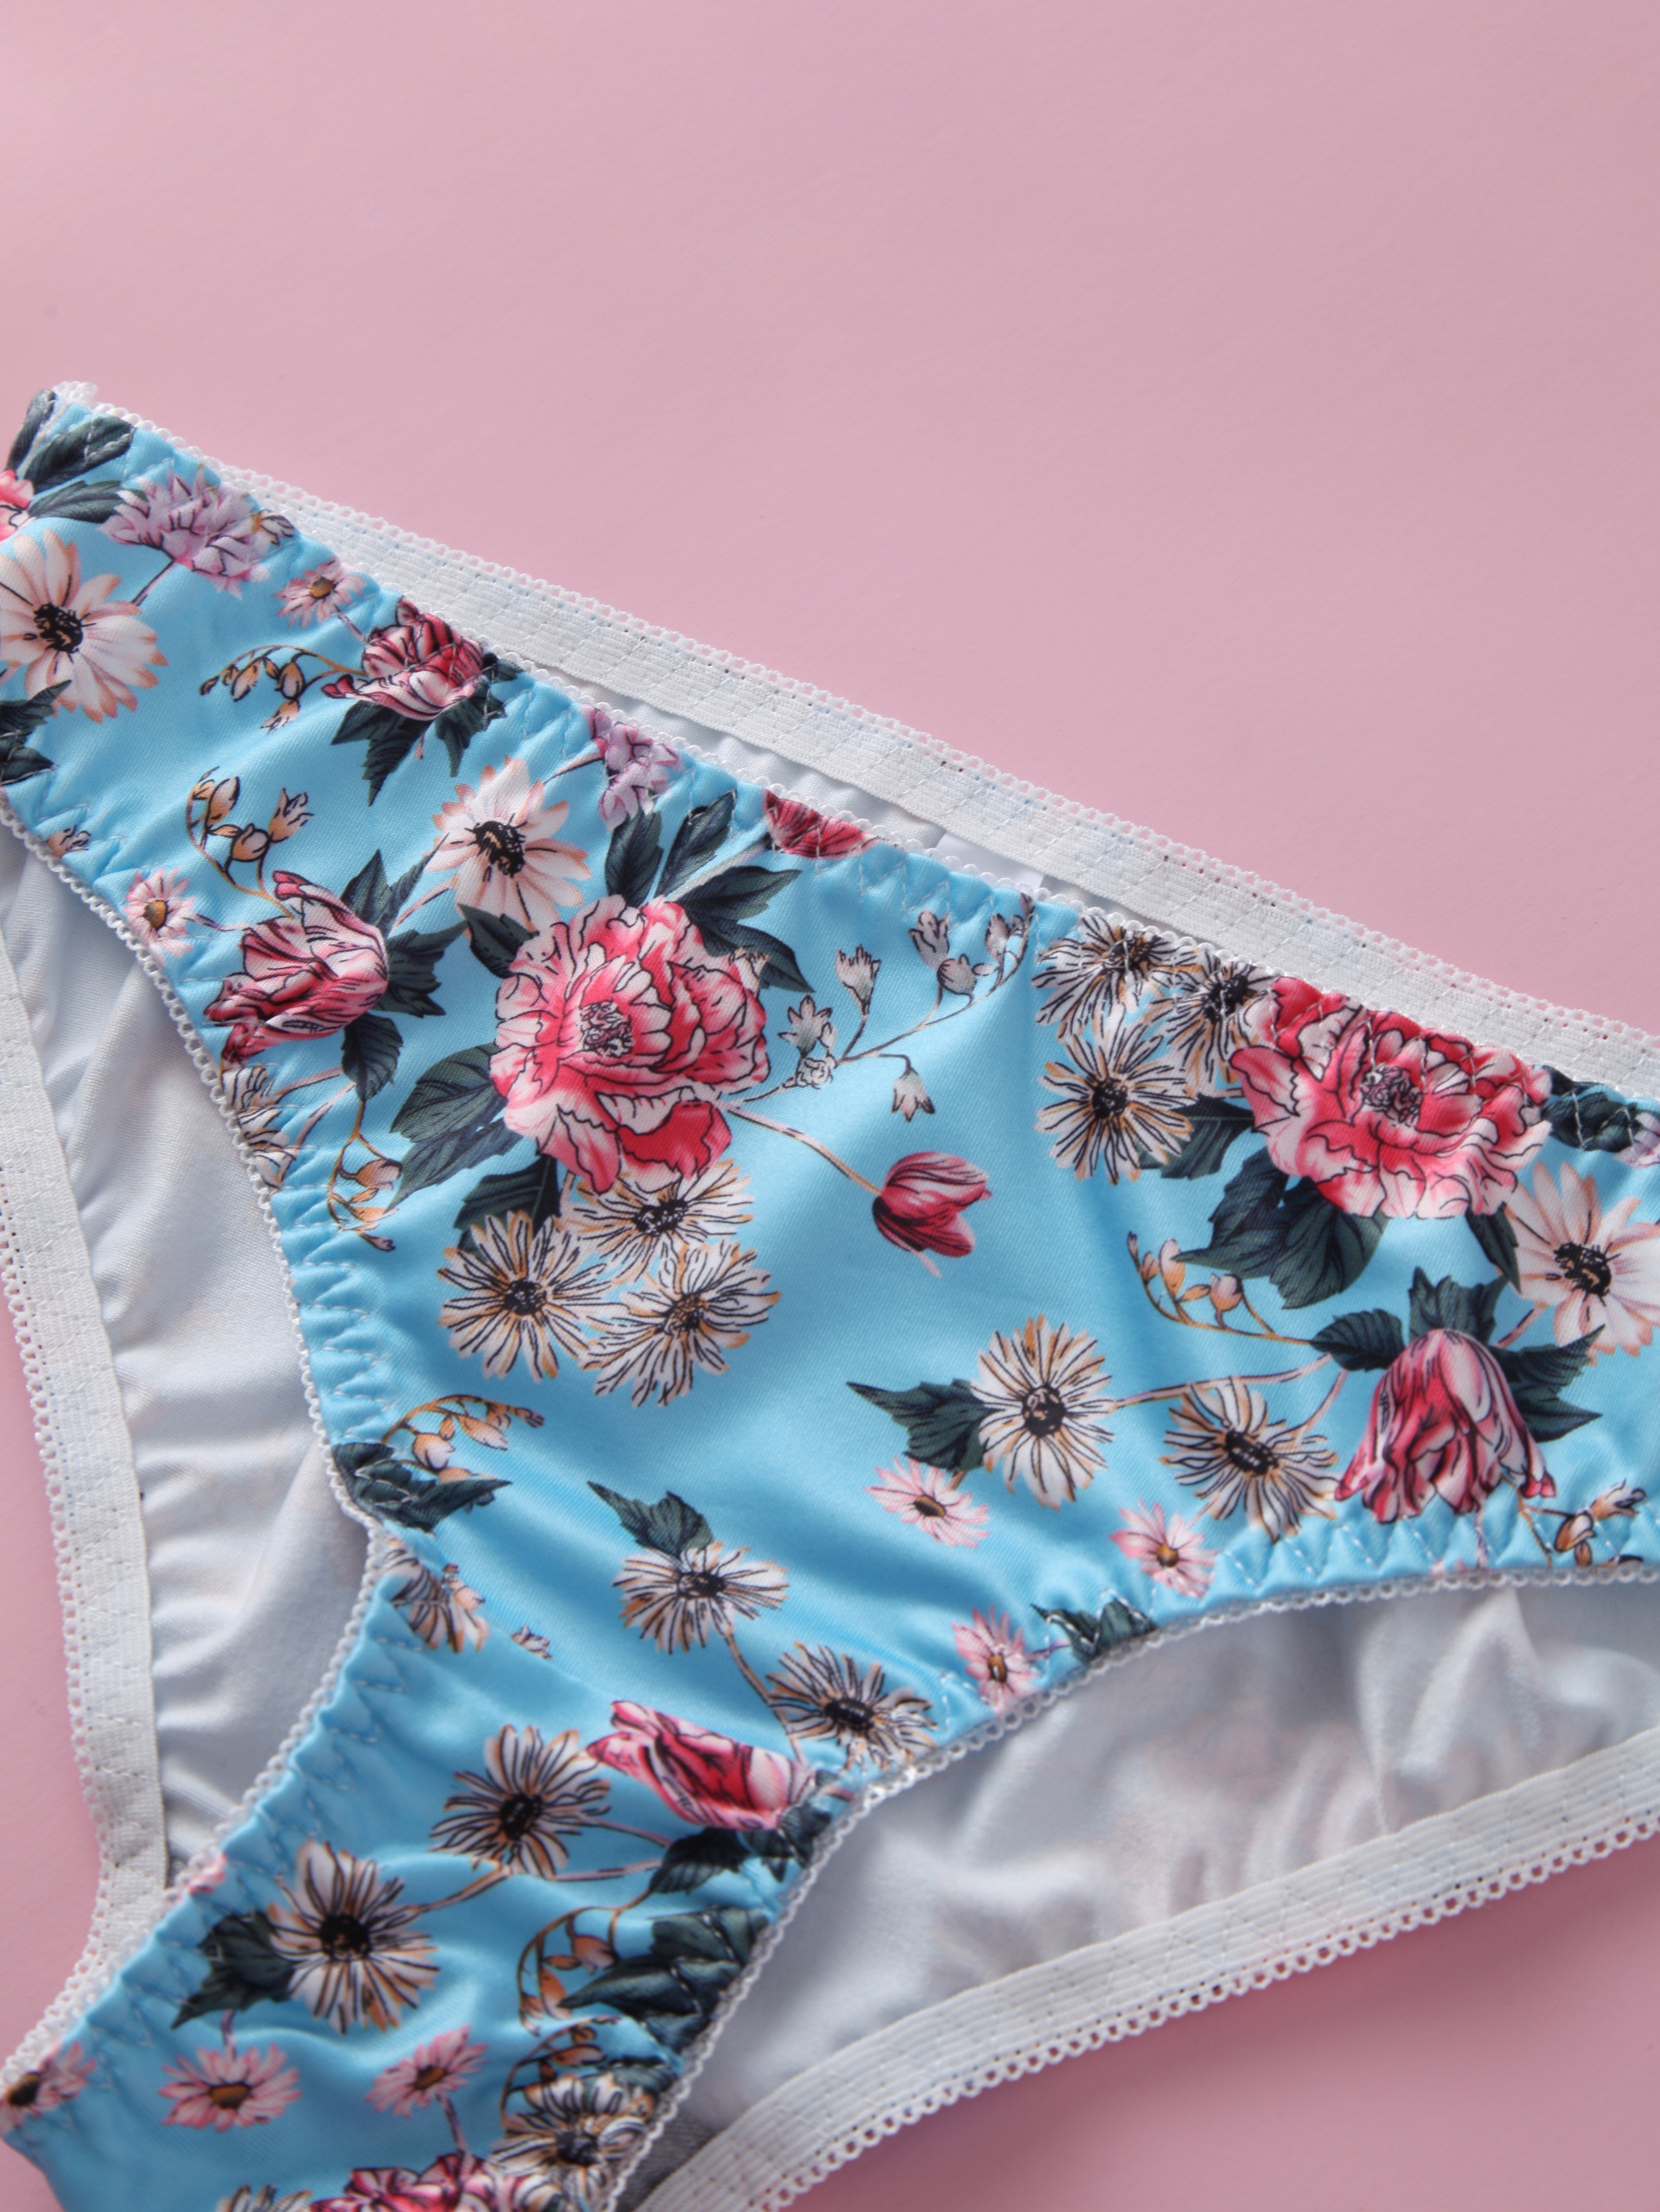 2 Sets Floral Print Bra & Panties, Push Up Bra & Elastic Panties Lingerie  Set, Women's Lingerie & Underwear